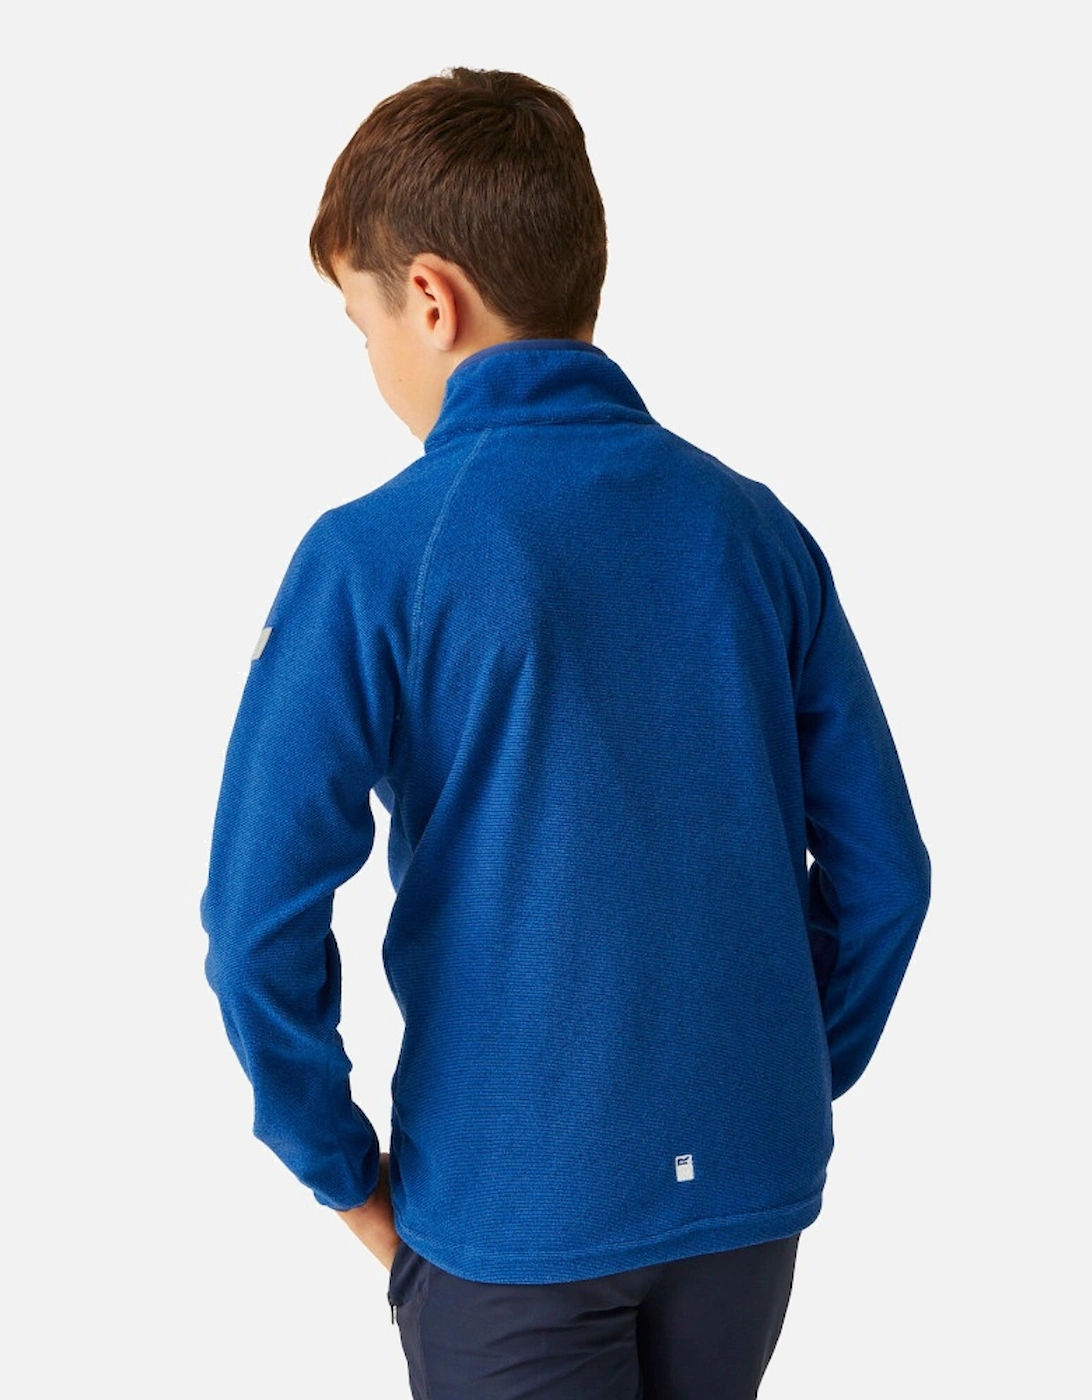 Boys & Girls Loco Zip Neck Stretch Fit Micro Fleece Jacket Top